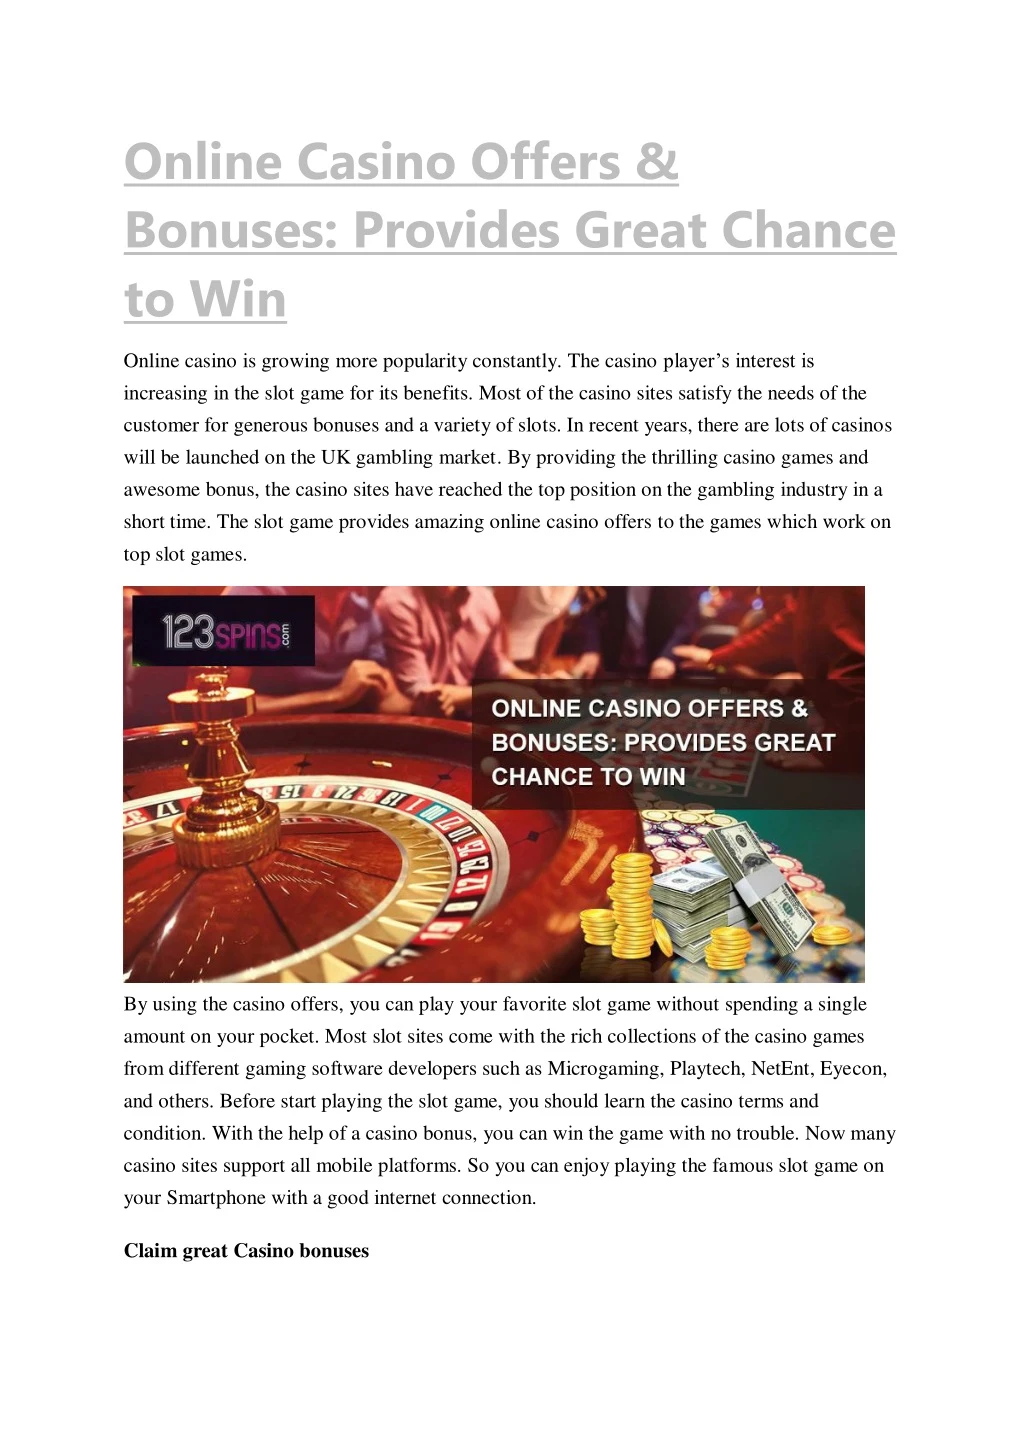 online casino offers bonuses provides great